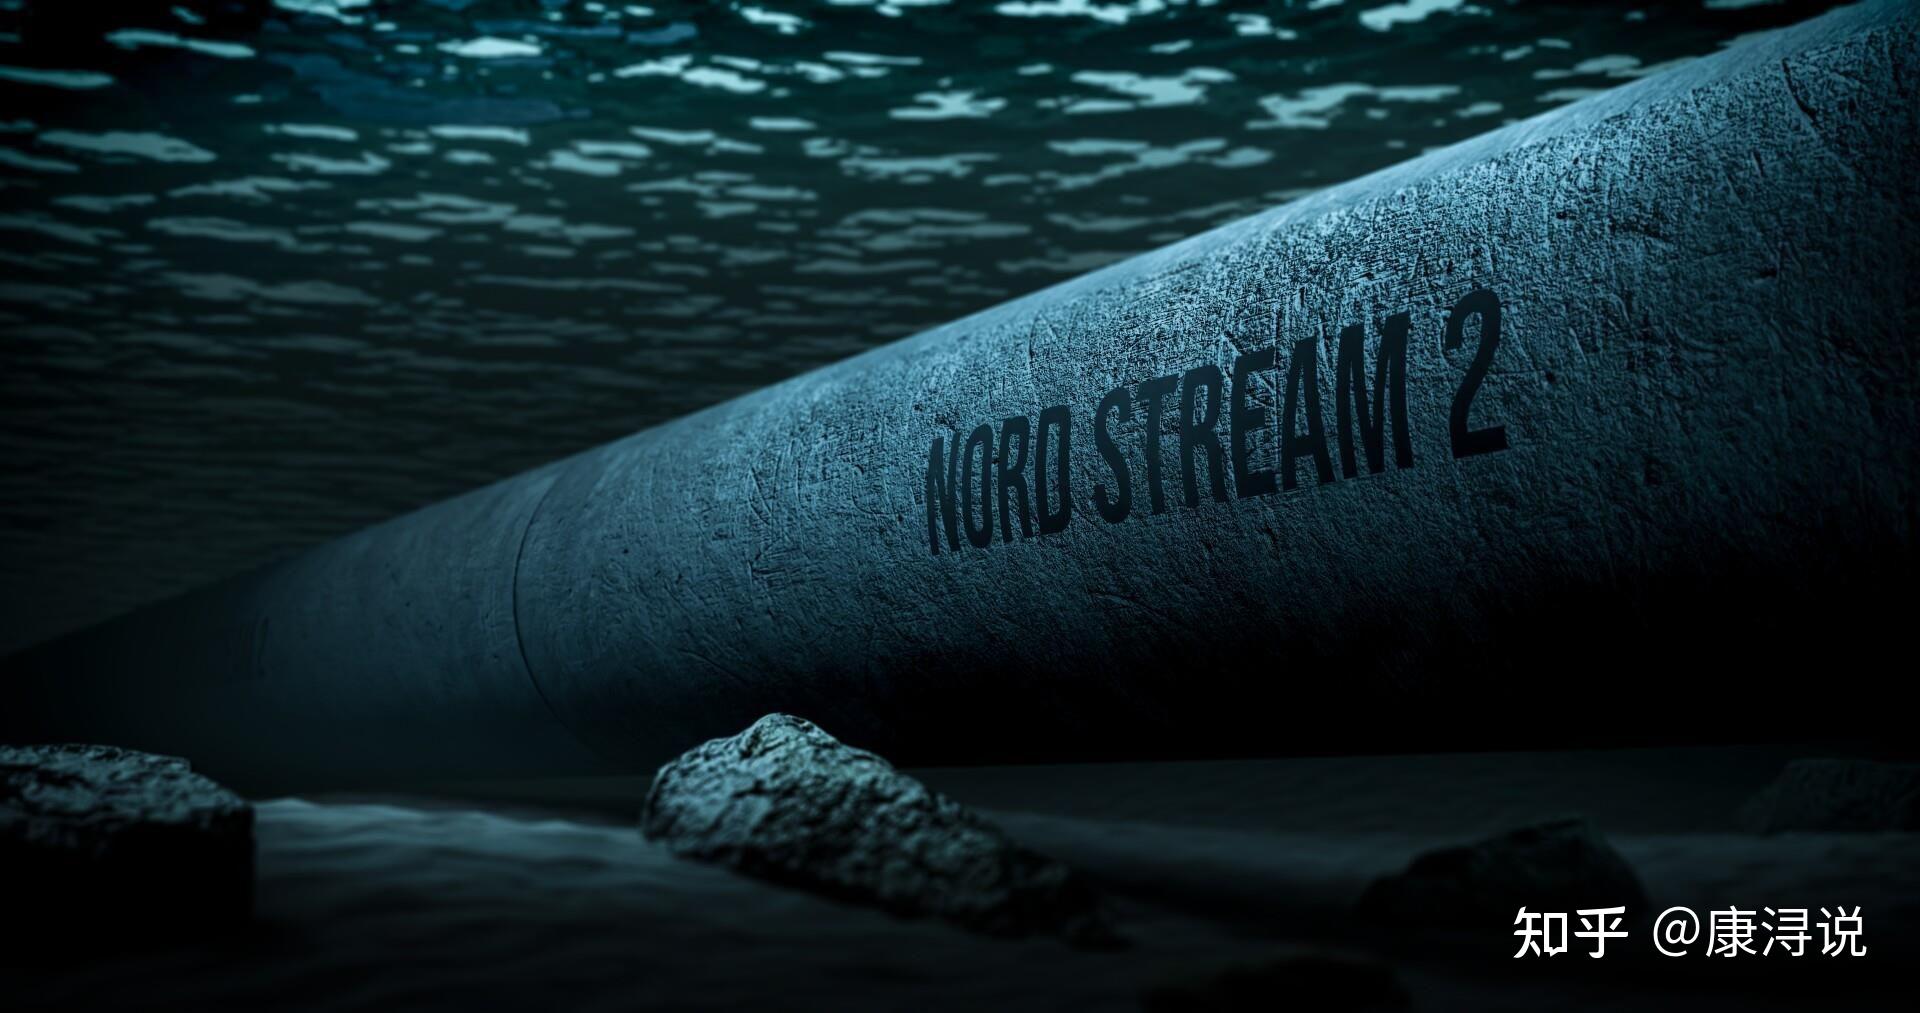 北溪天然气管道爆炸后 挪威海底电缆又断裂_哔哩哔哩 (゜-゜)つロ 干杯~-bilibili